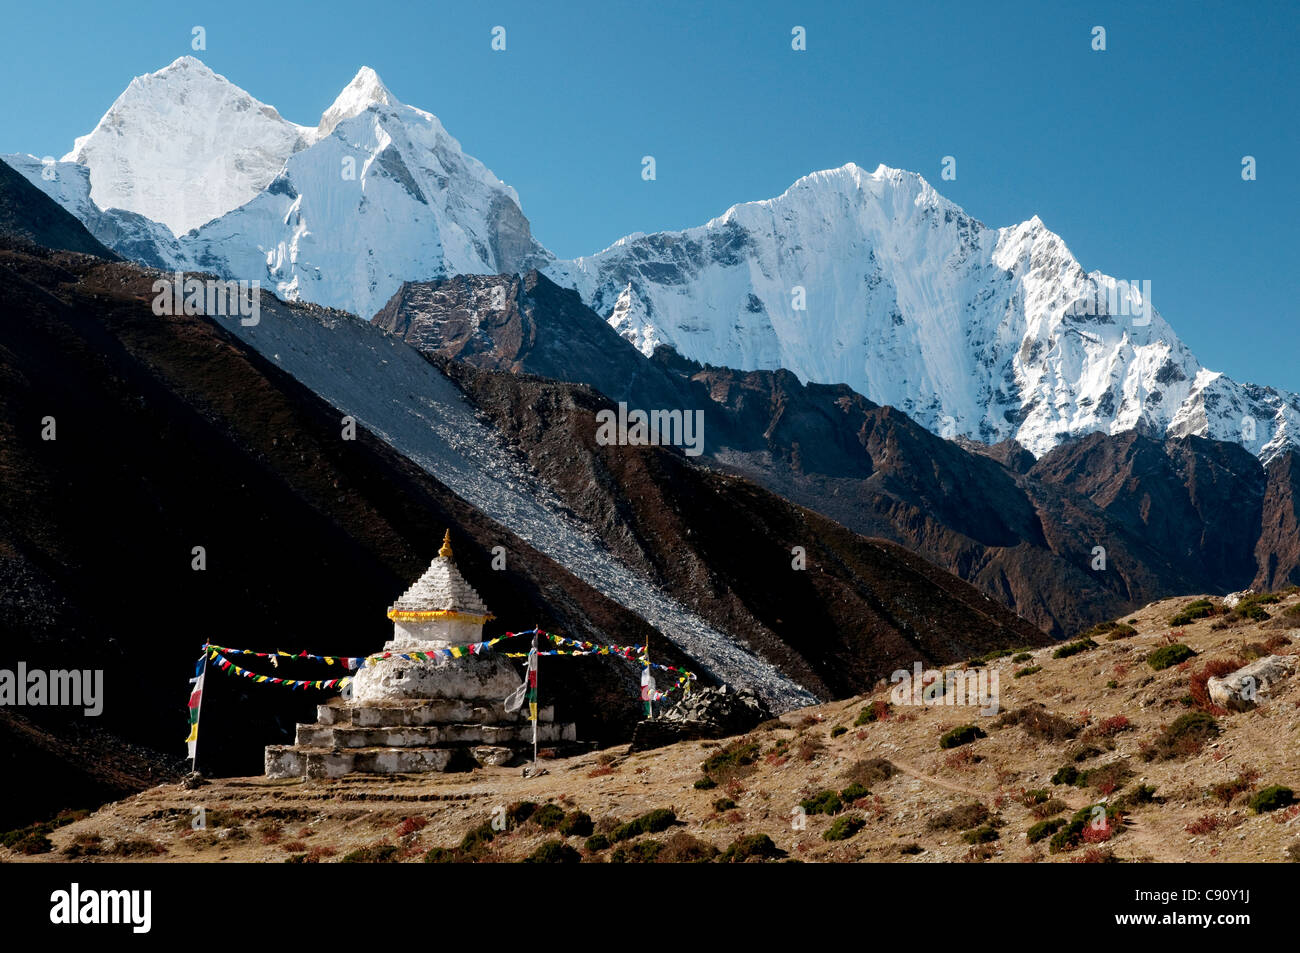 Thamserku y el pico de Kaing Taiga o Kangtega torre sobre la ruta hasta el campamento base del Everest en la región de Khumbu solucion. Foto de stock